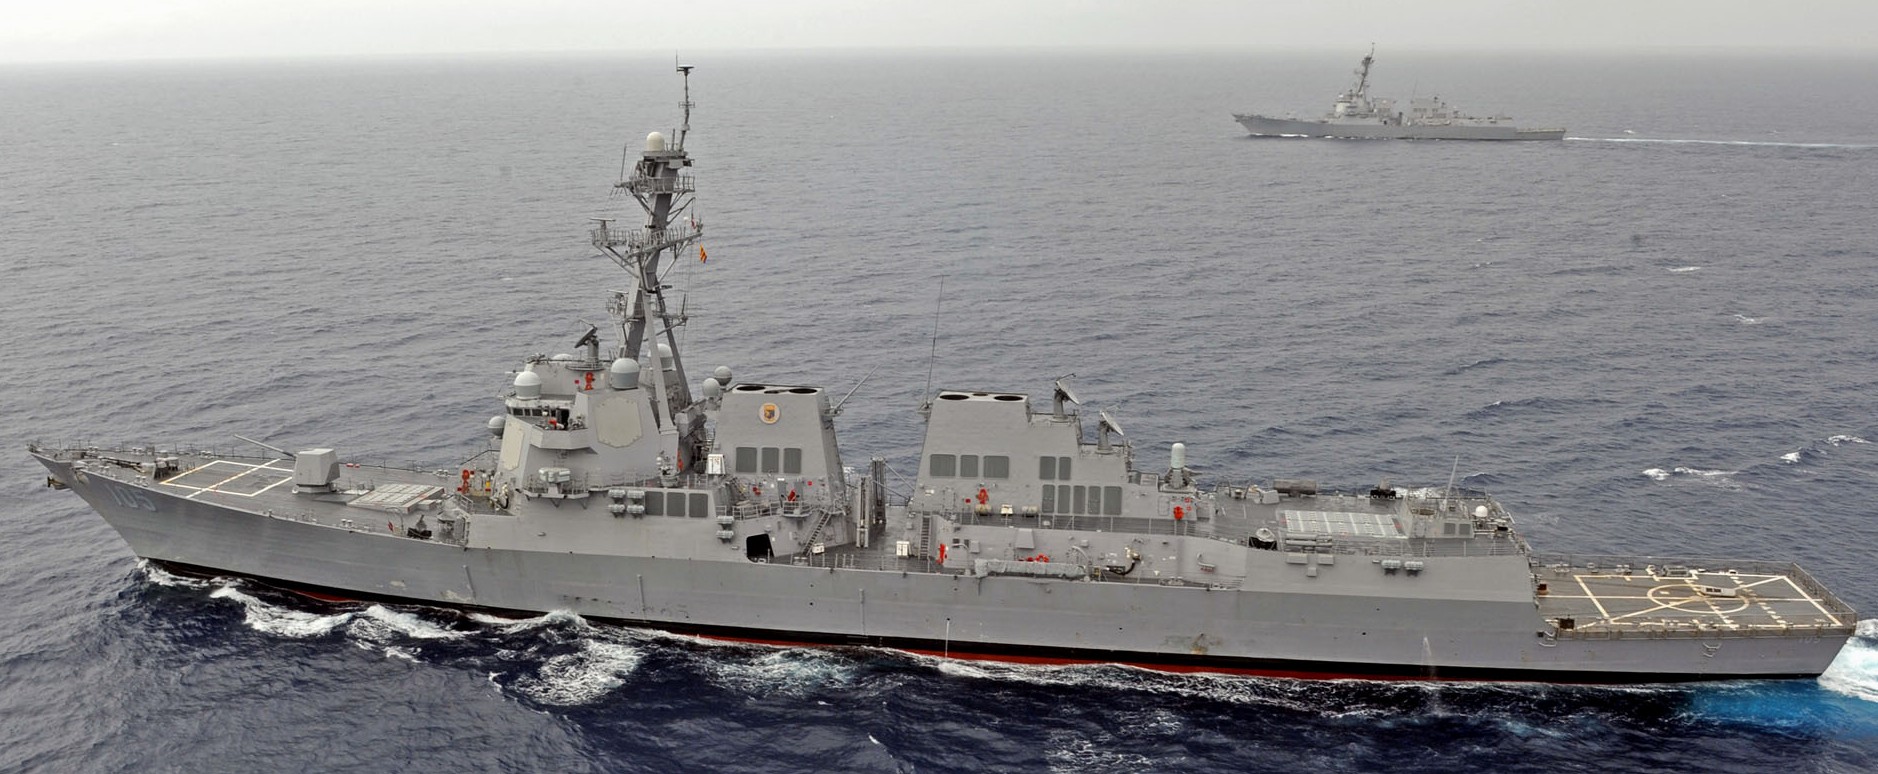 ddg-110 uss dewey arleigh burke class guided missile destroyer aegis us navy south china sea 39